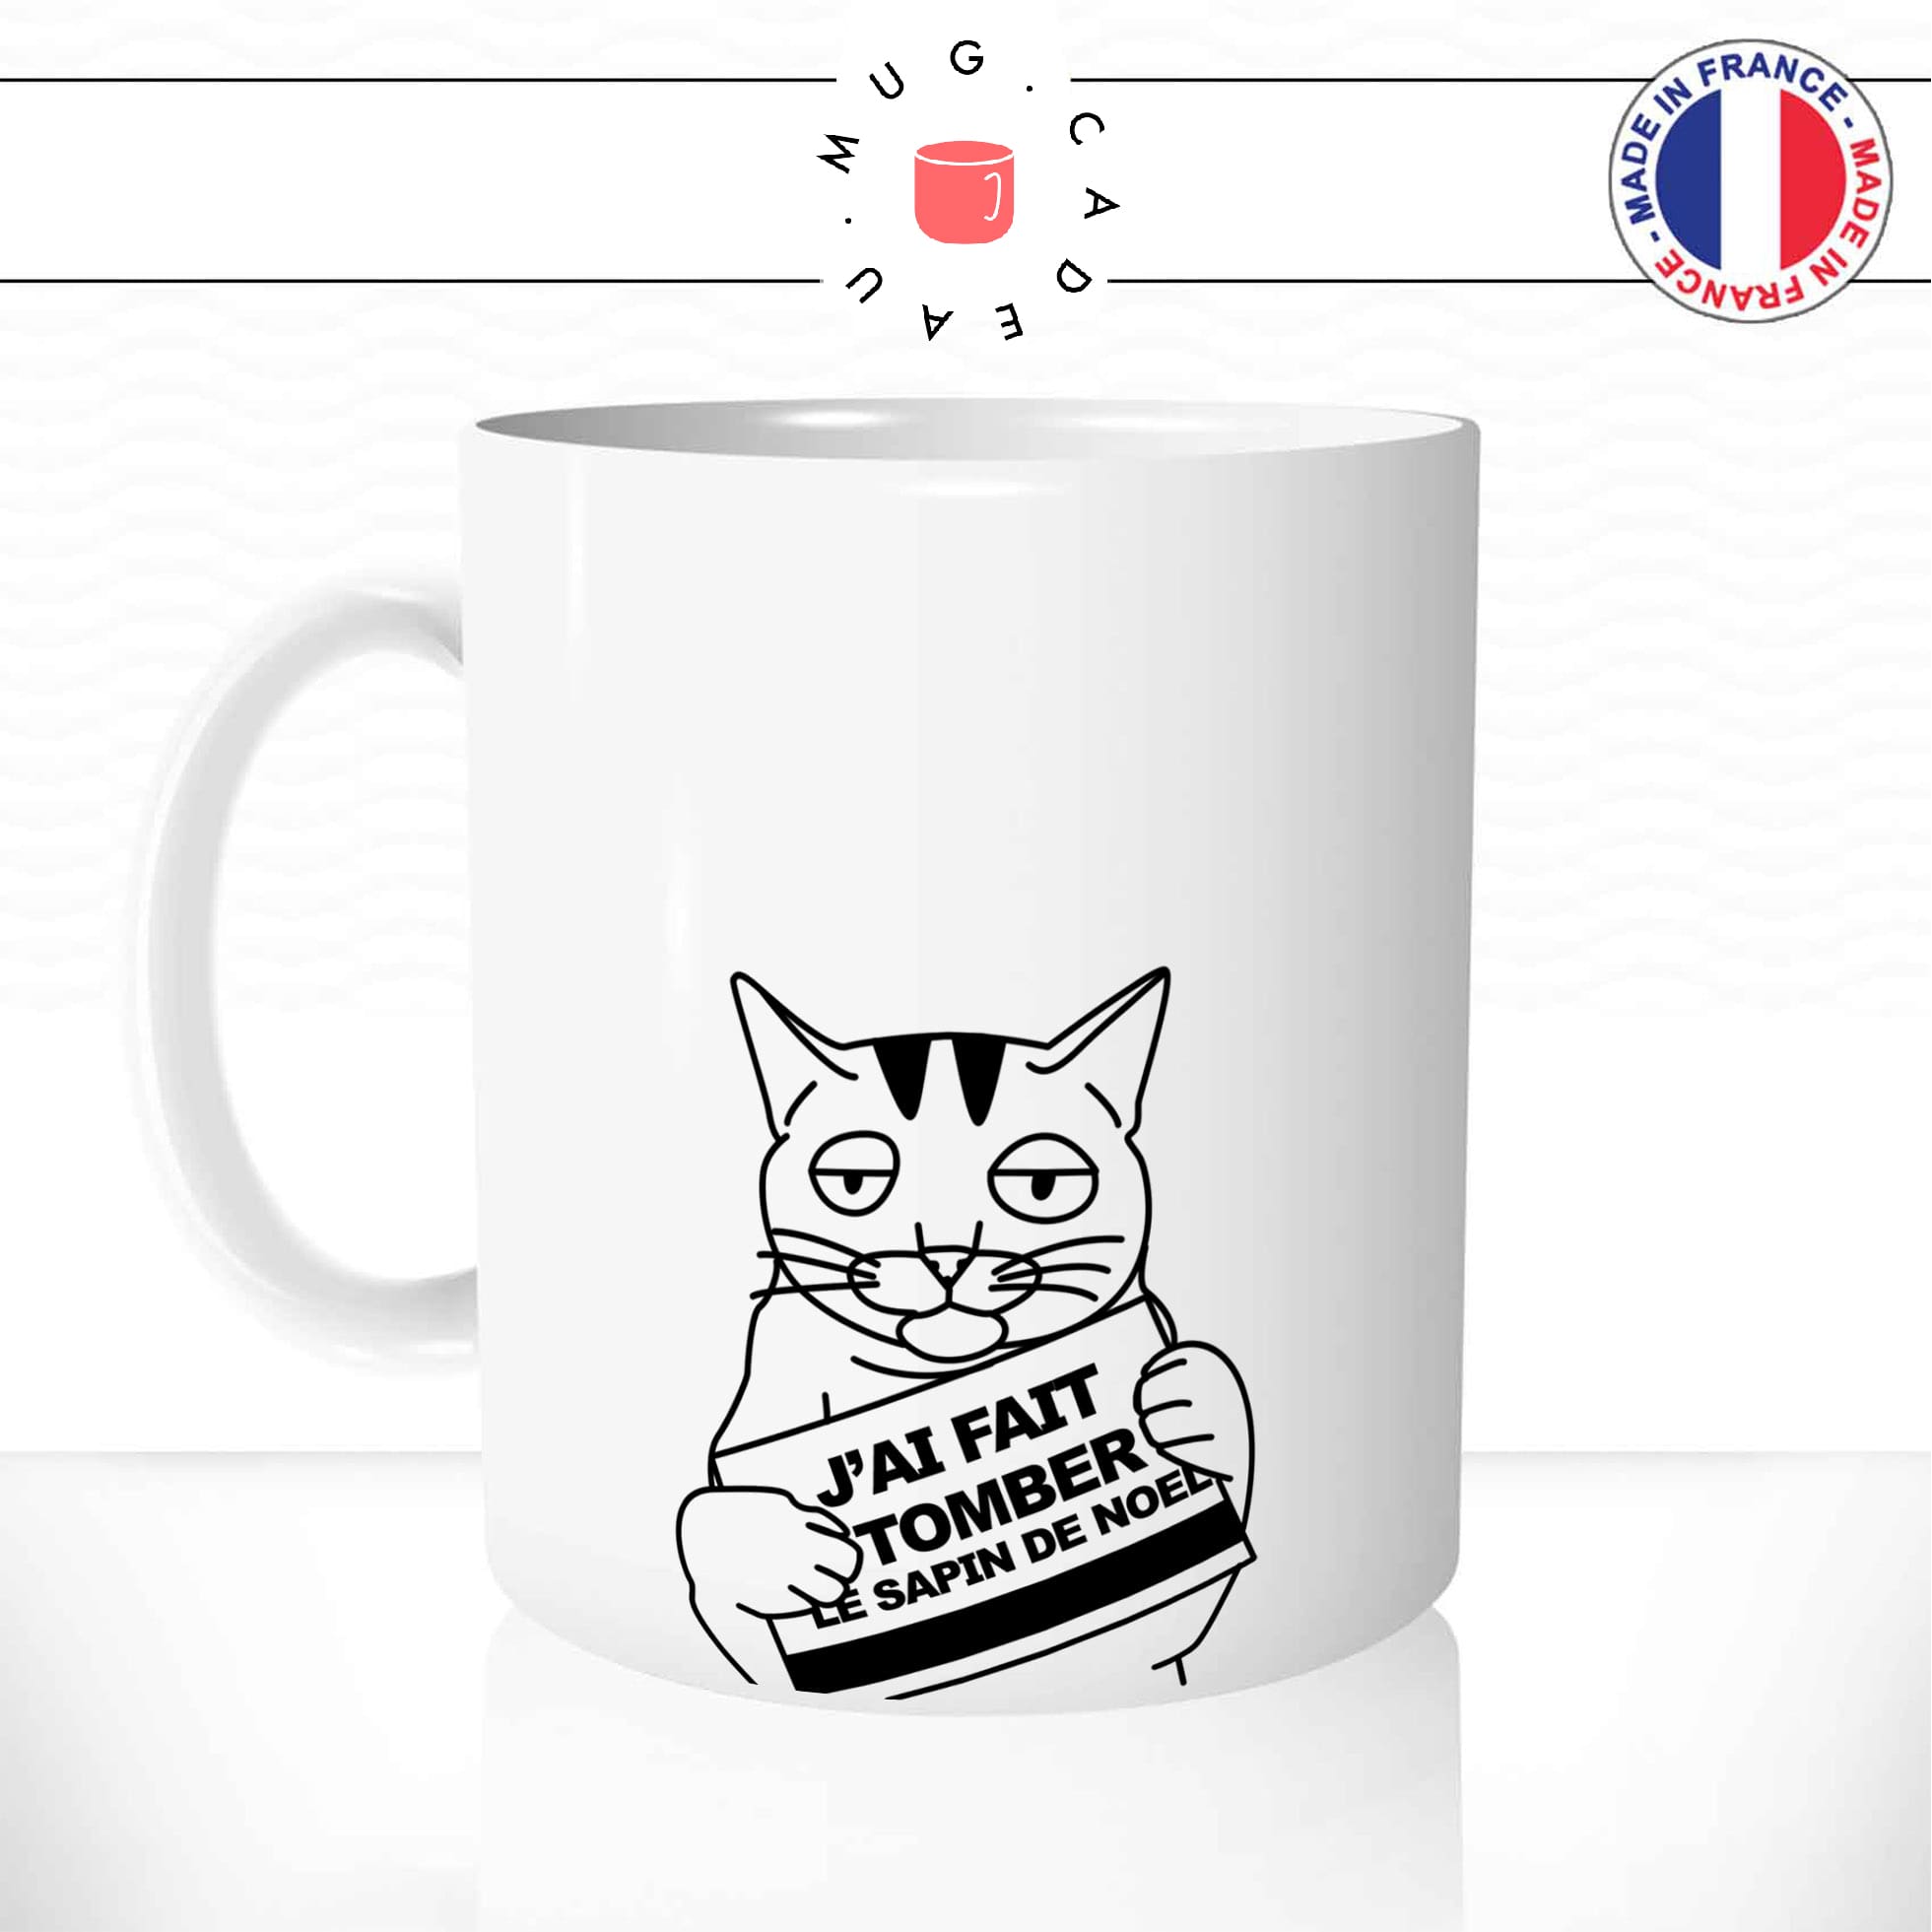 mug-tasse-chat-chaton-j'ai-fait-tomber-sapin-noel-drole-mignon-dessin-animal-cafe-thé-idée-cadeau-original1